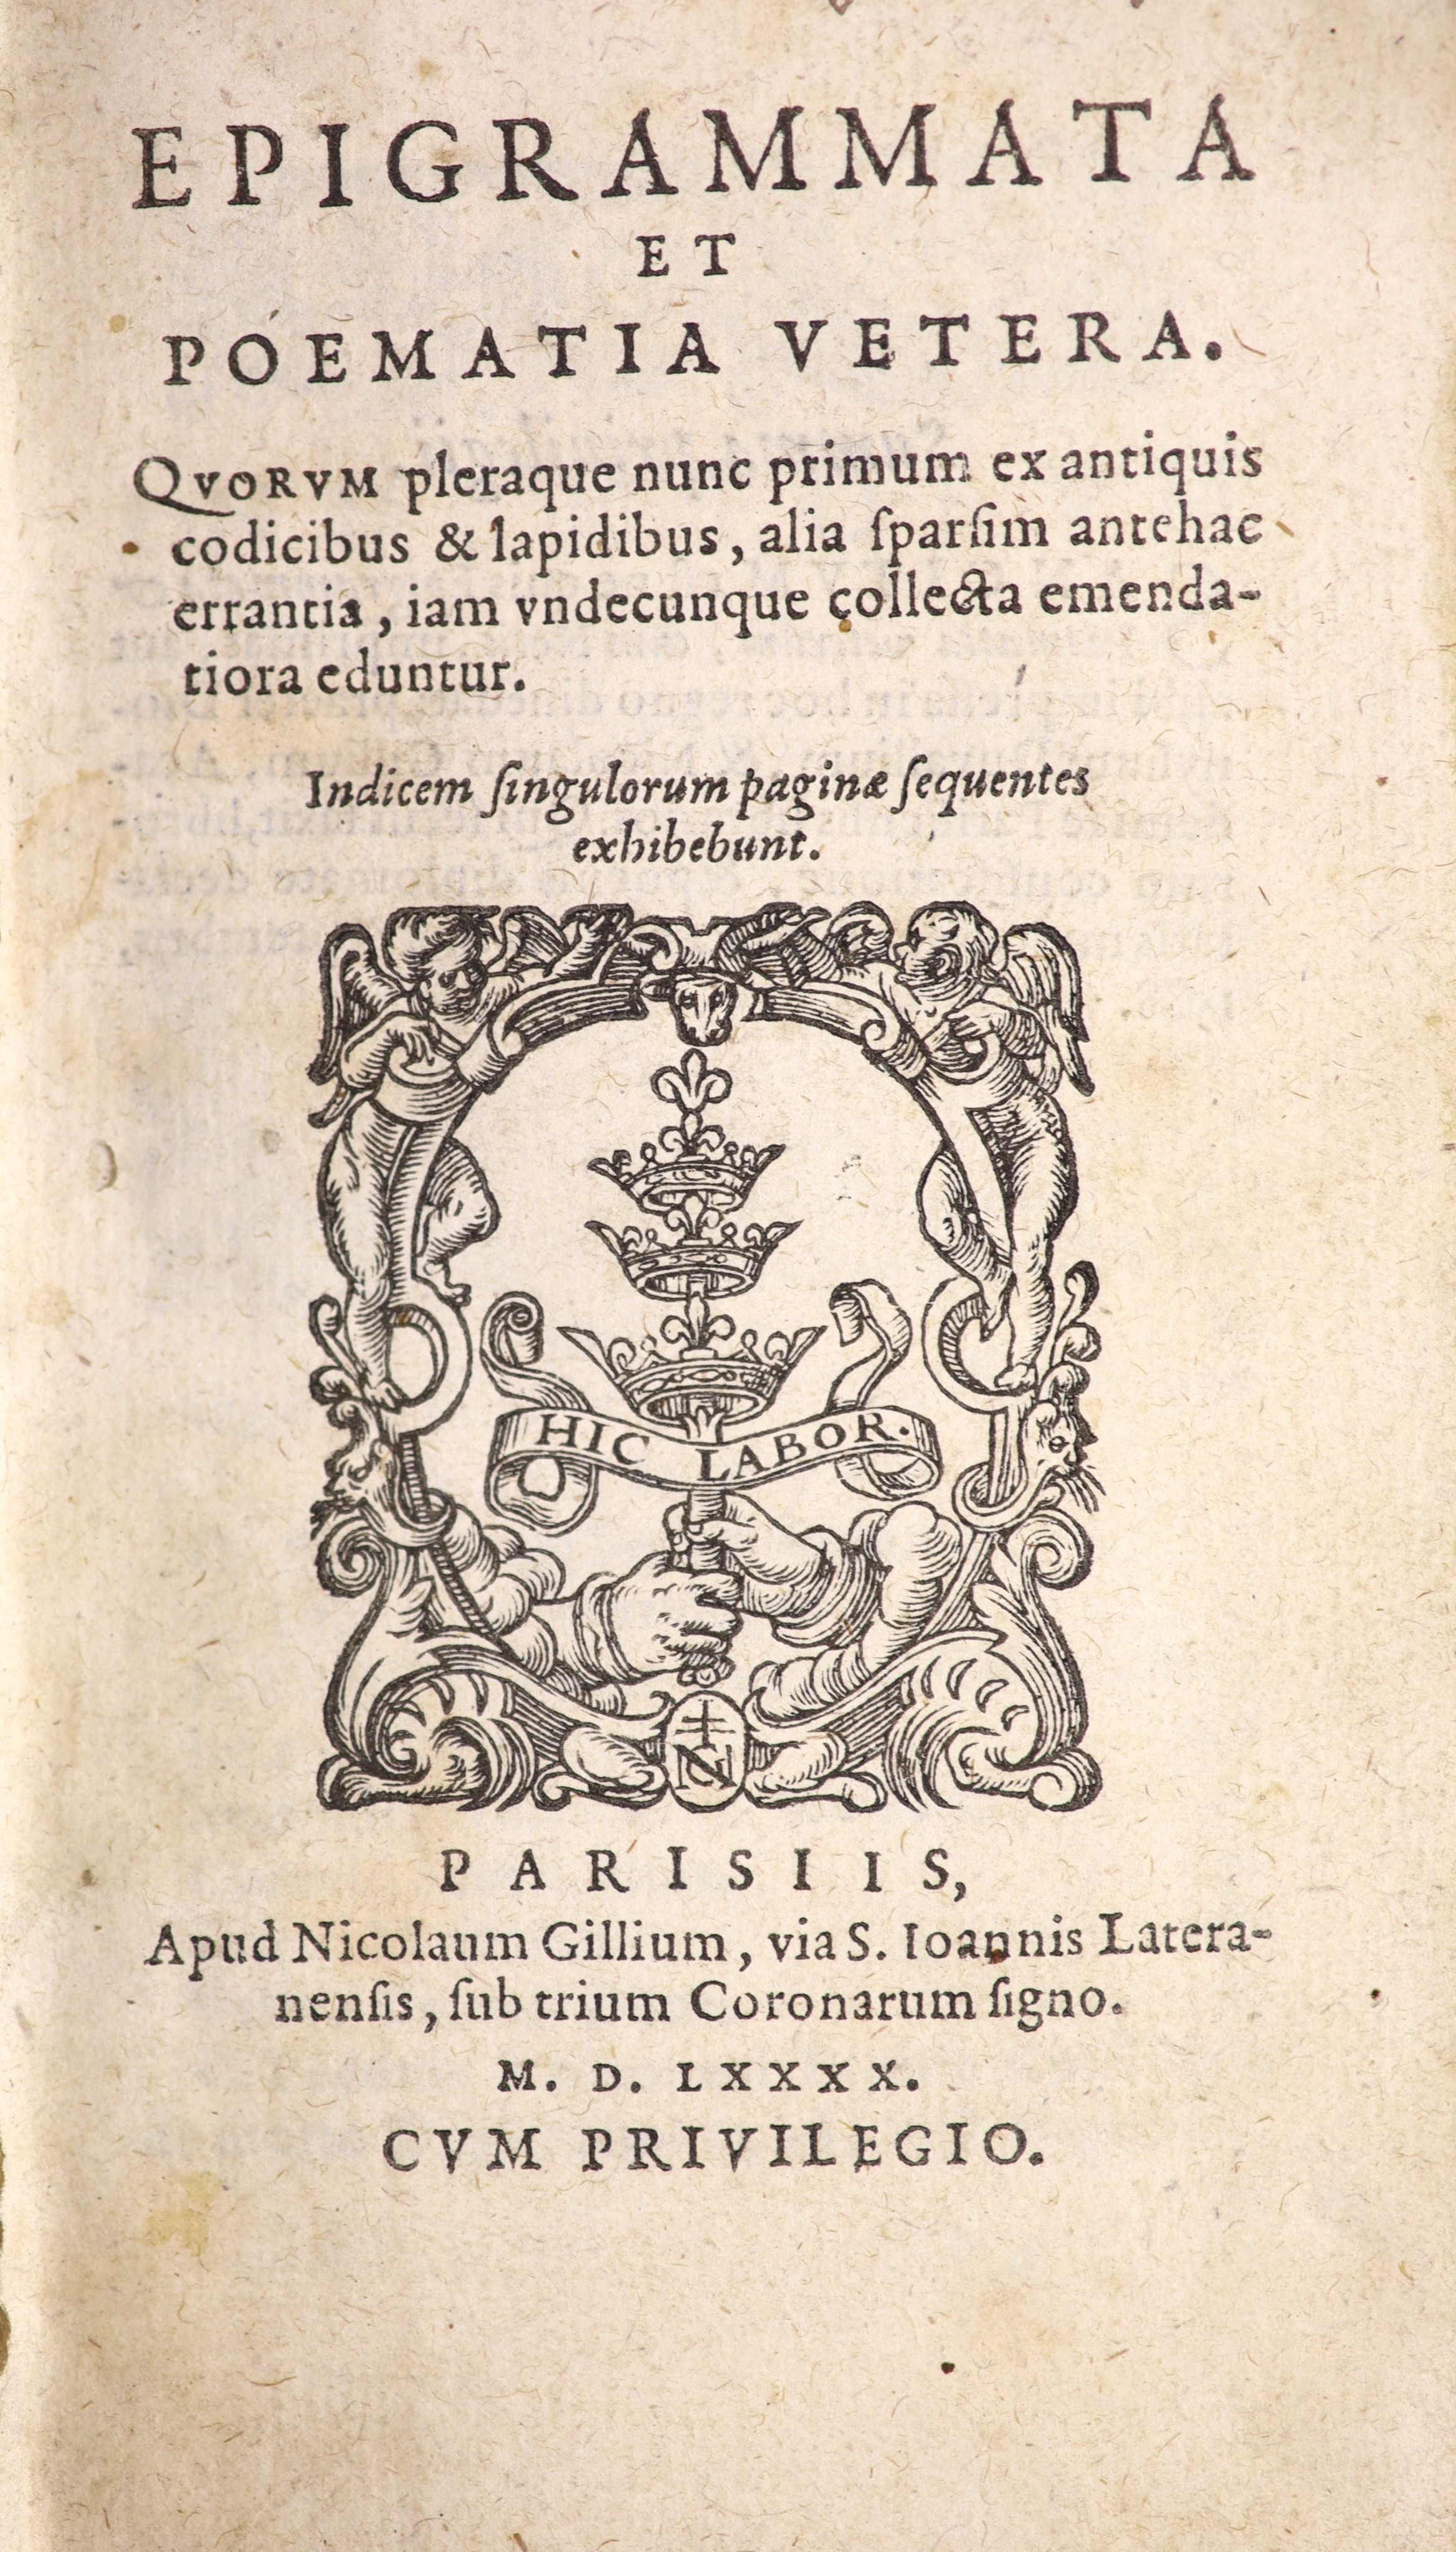 Pithou, Pierre (editor) - Epigrammata et Poematia Vetera, 12mo, vellum, title with woodcut cartouche enclosing a sceptre,